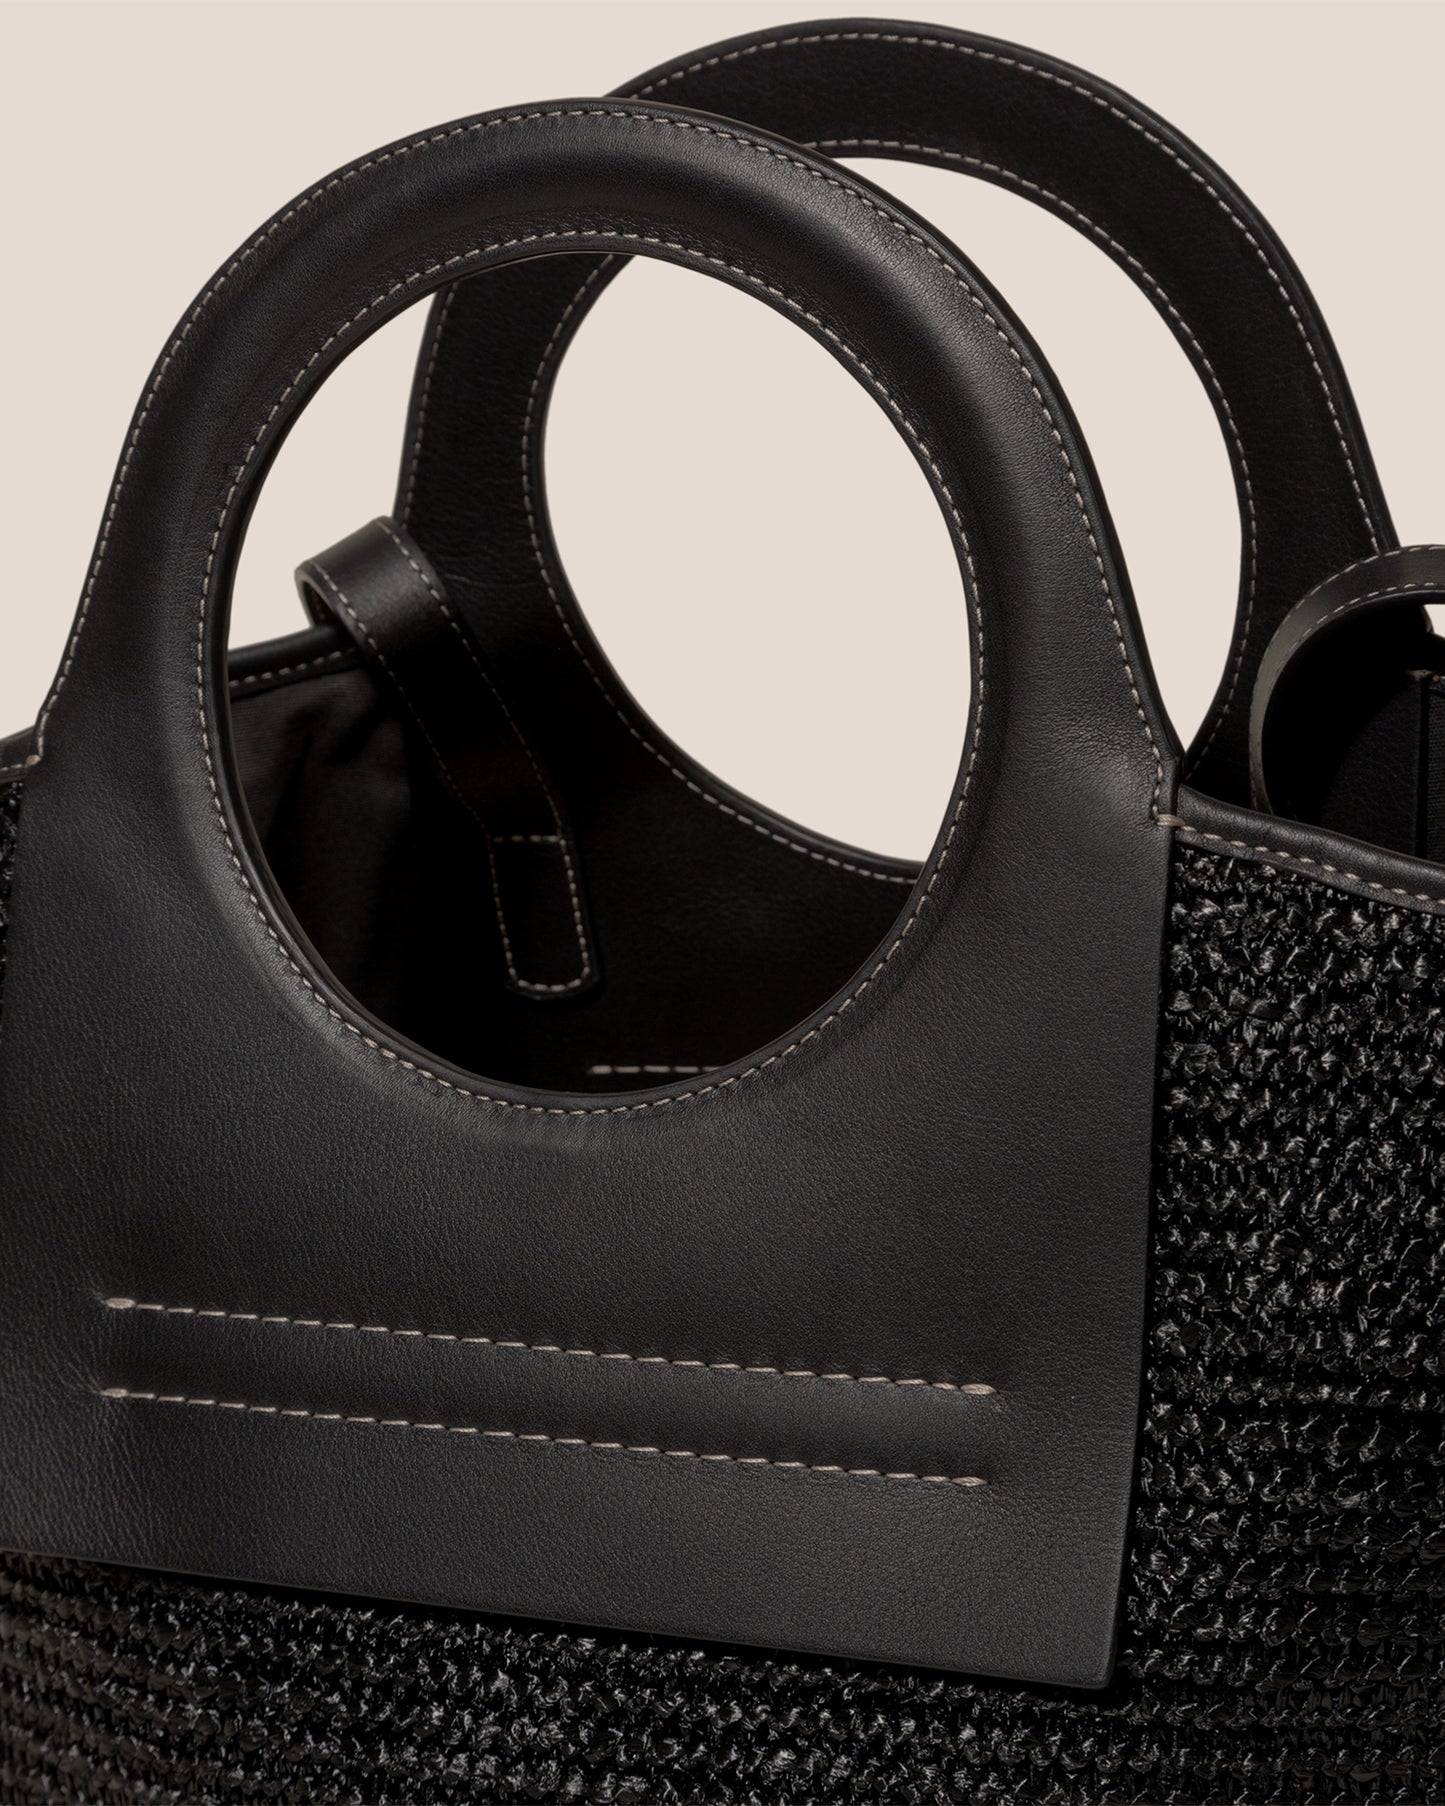 CALA S RAFFIA - Leather-trimmed Tote Bag